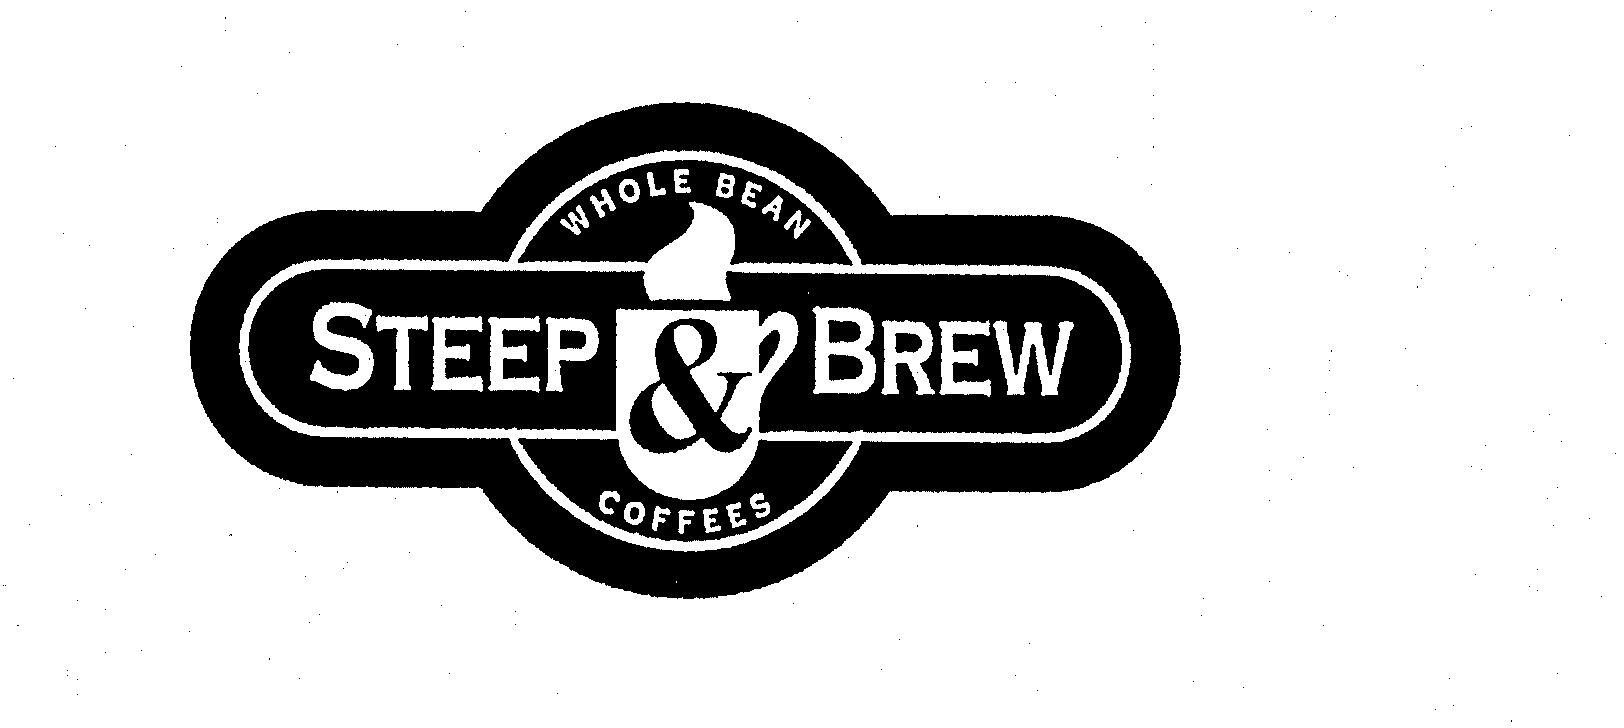  WHOLE BEAN STEEP &amp; BREW COFFEES